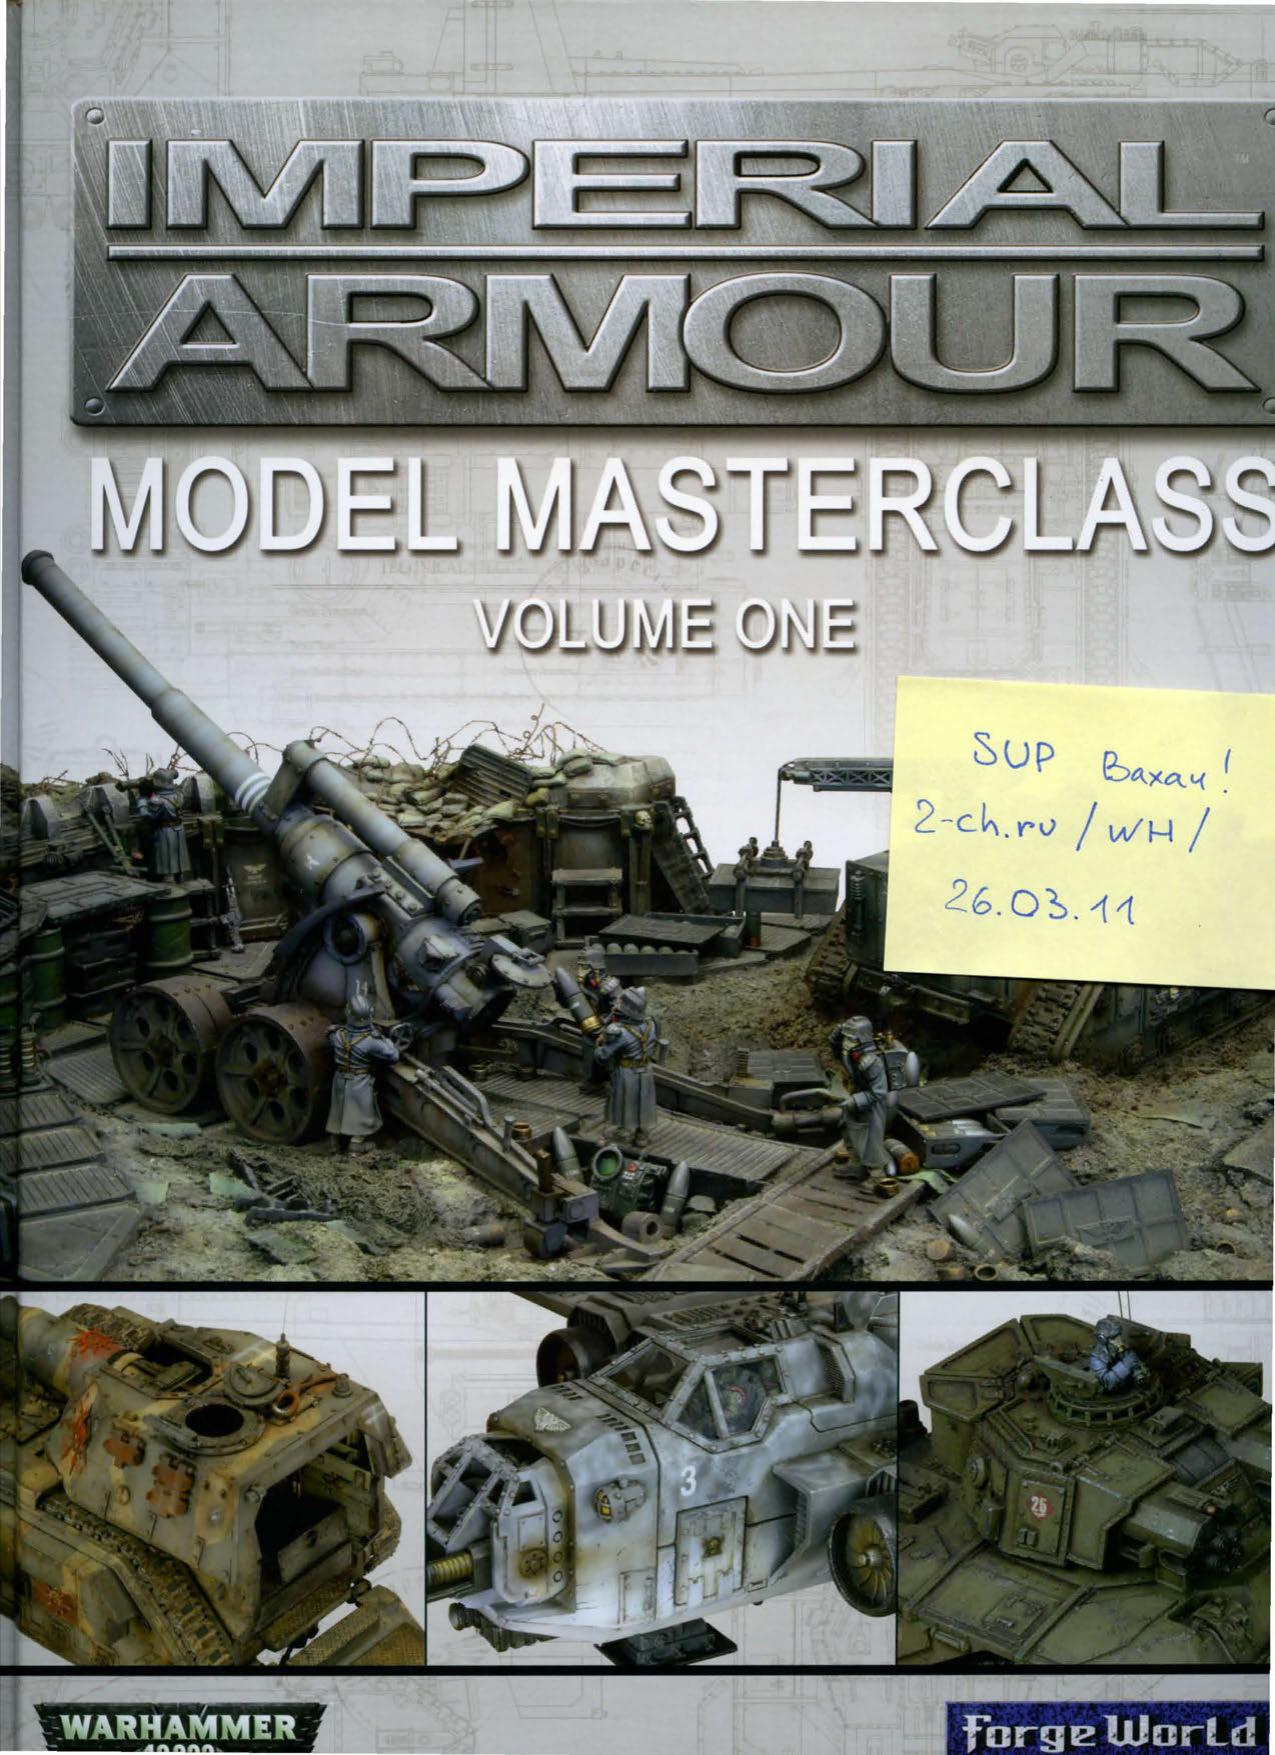 Model Masterclass, Vol 1